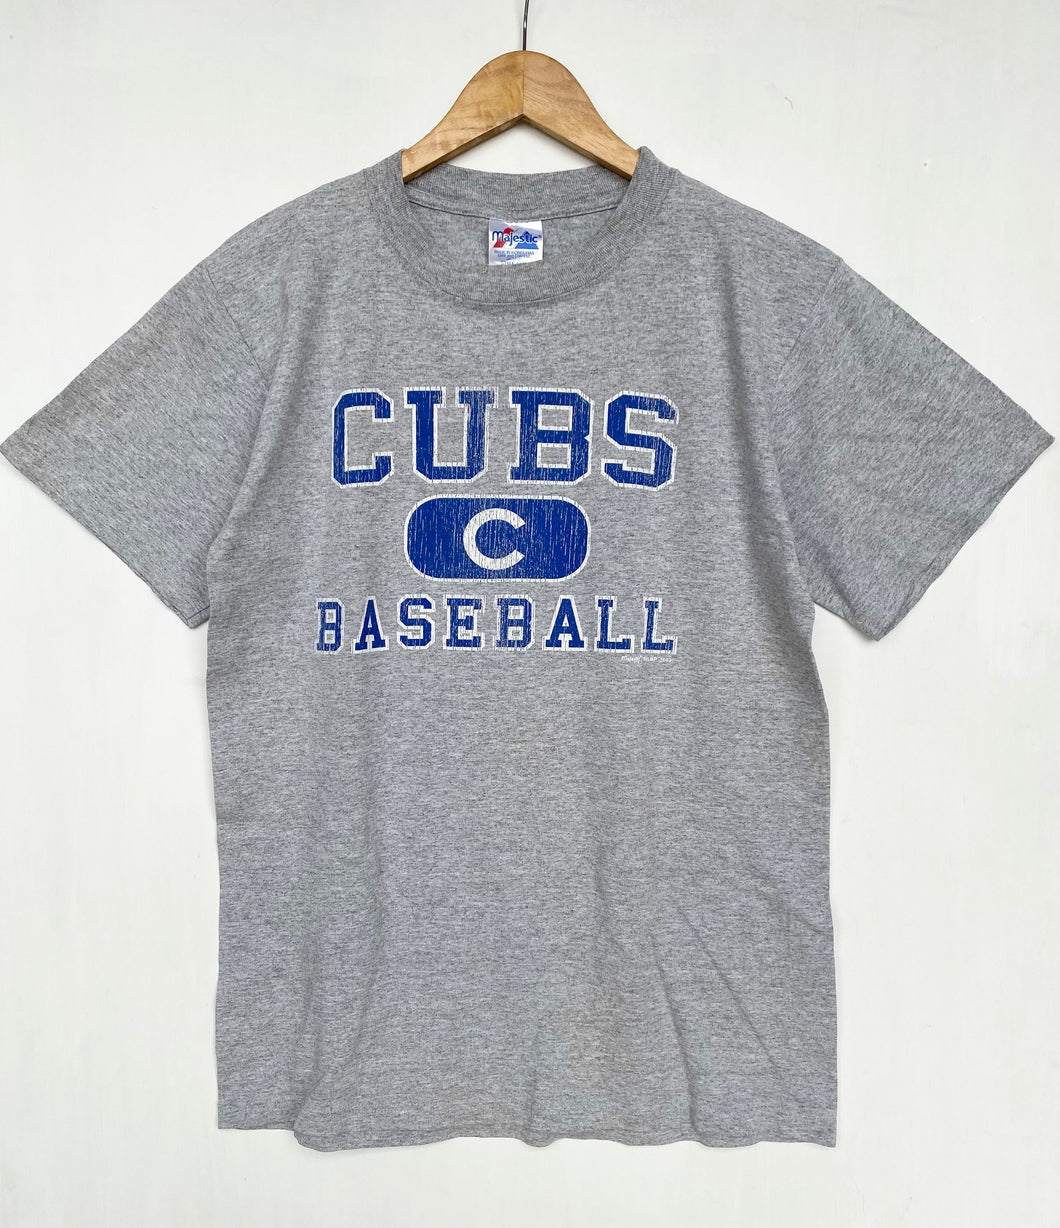 MLB Chicago Cubs T-shirt (M)